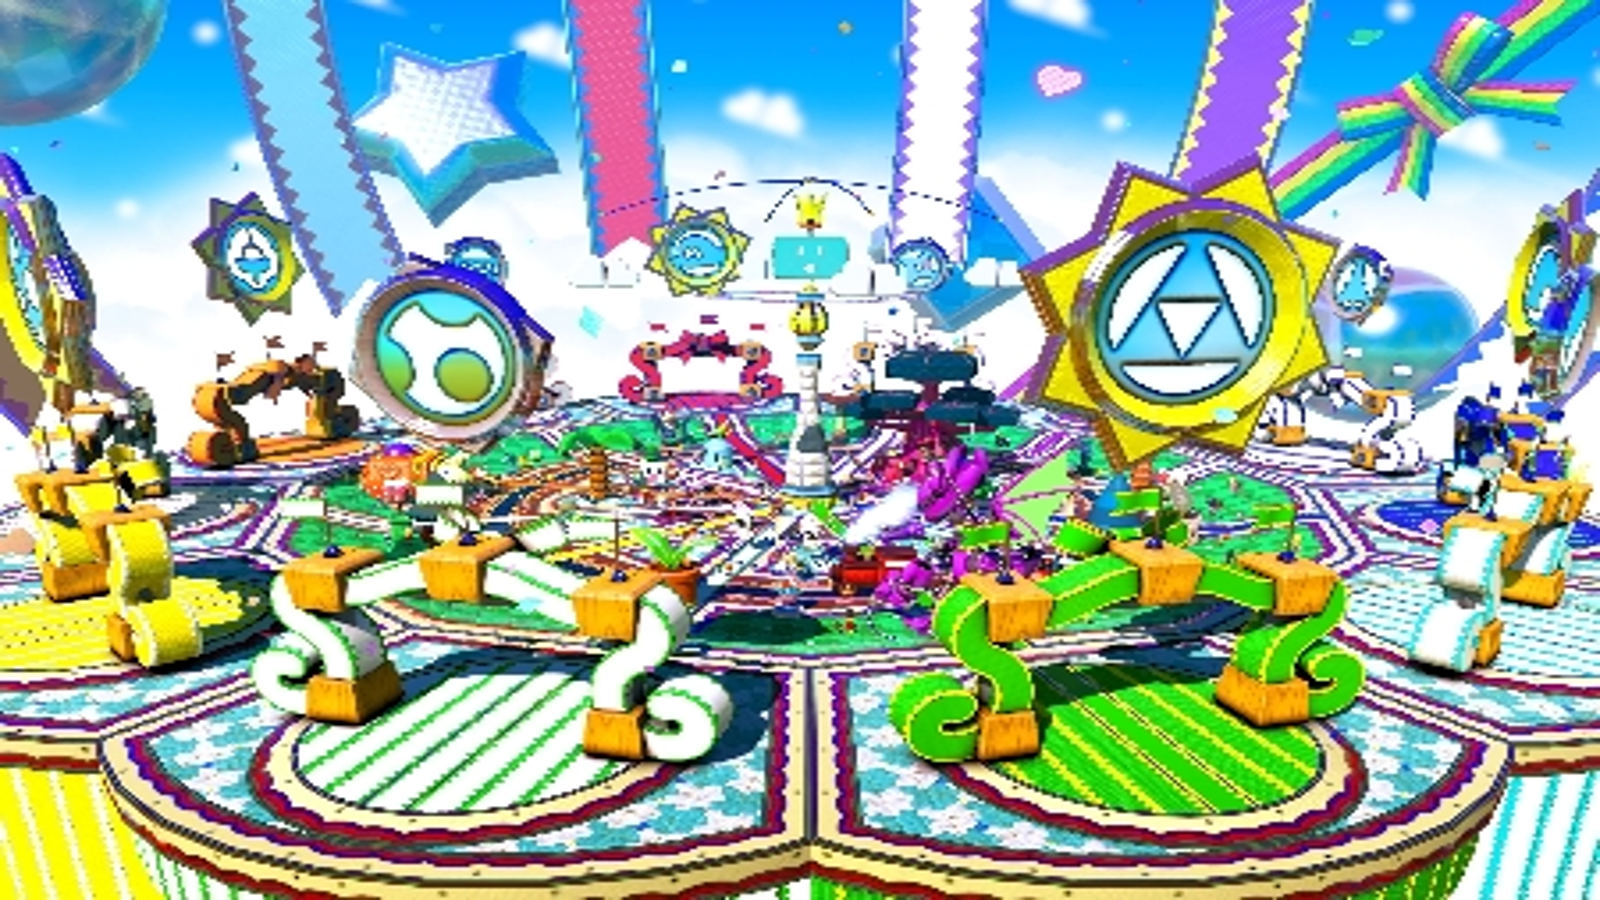 Nintendo Land' - hours of fun for Wii U